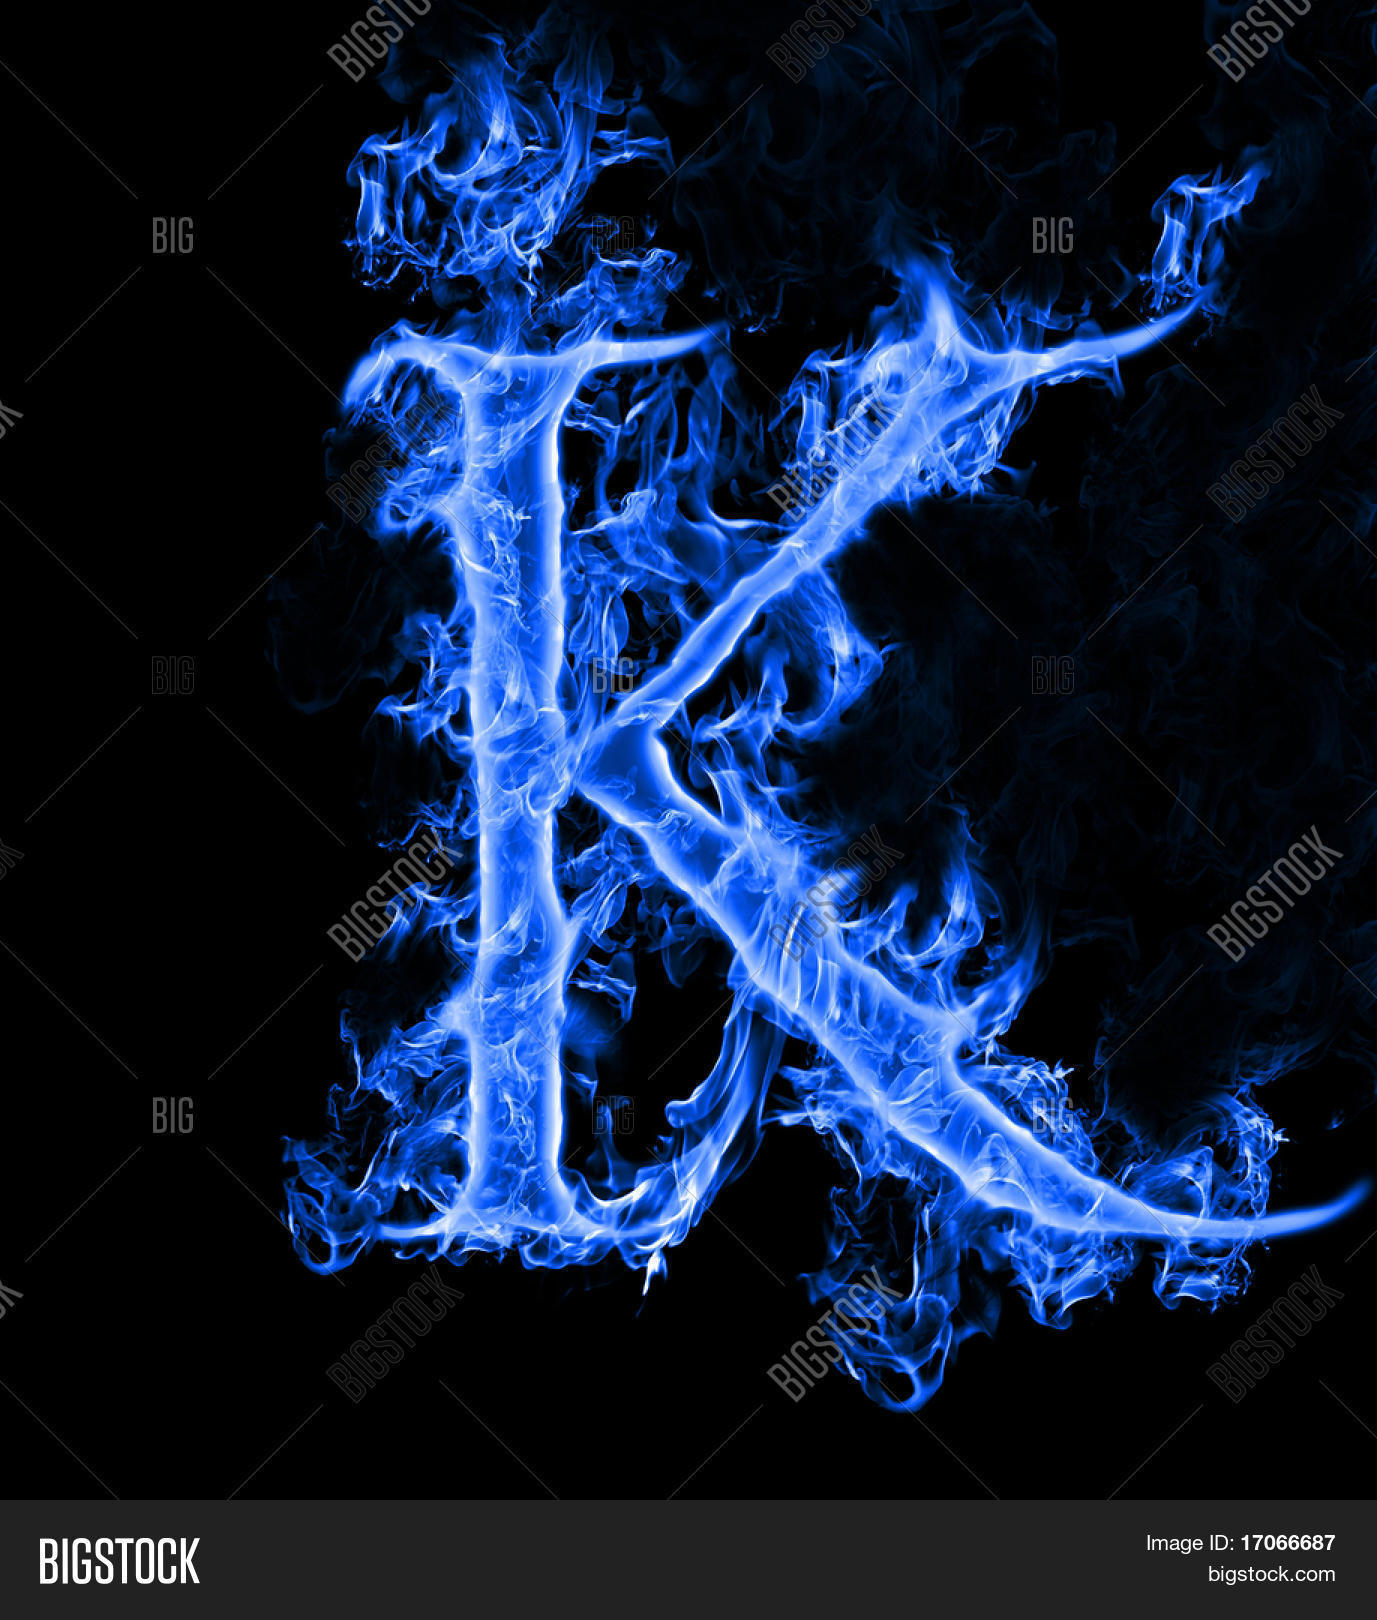 Blue Smoke Letter K Image - cg1p7066687c